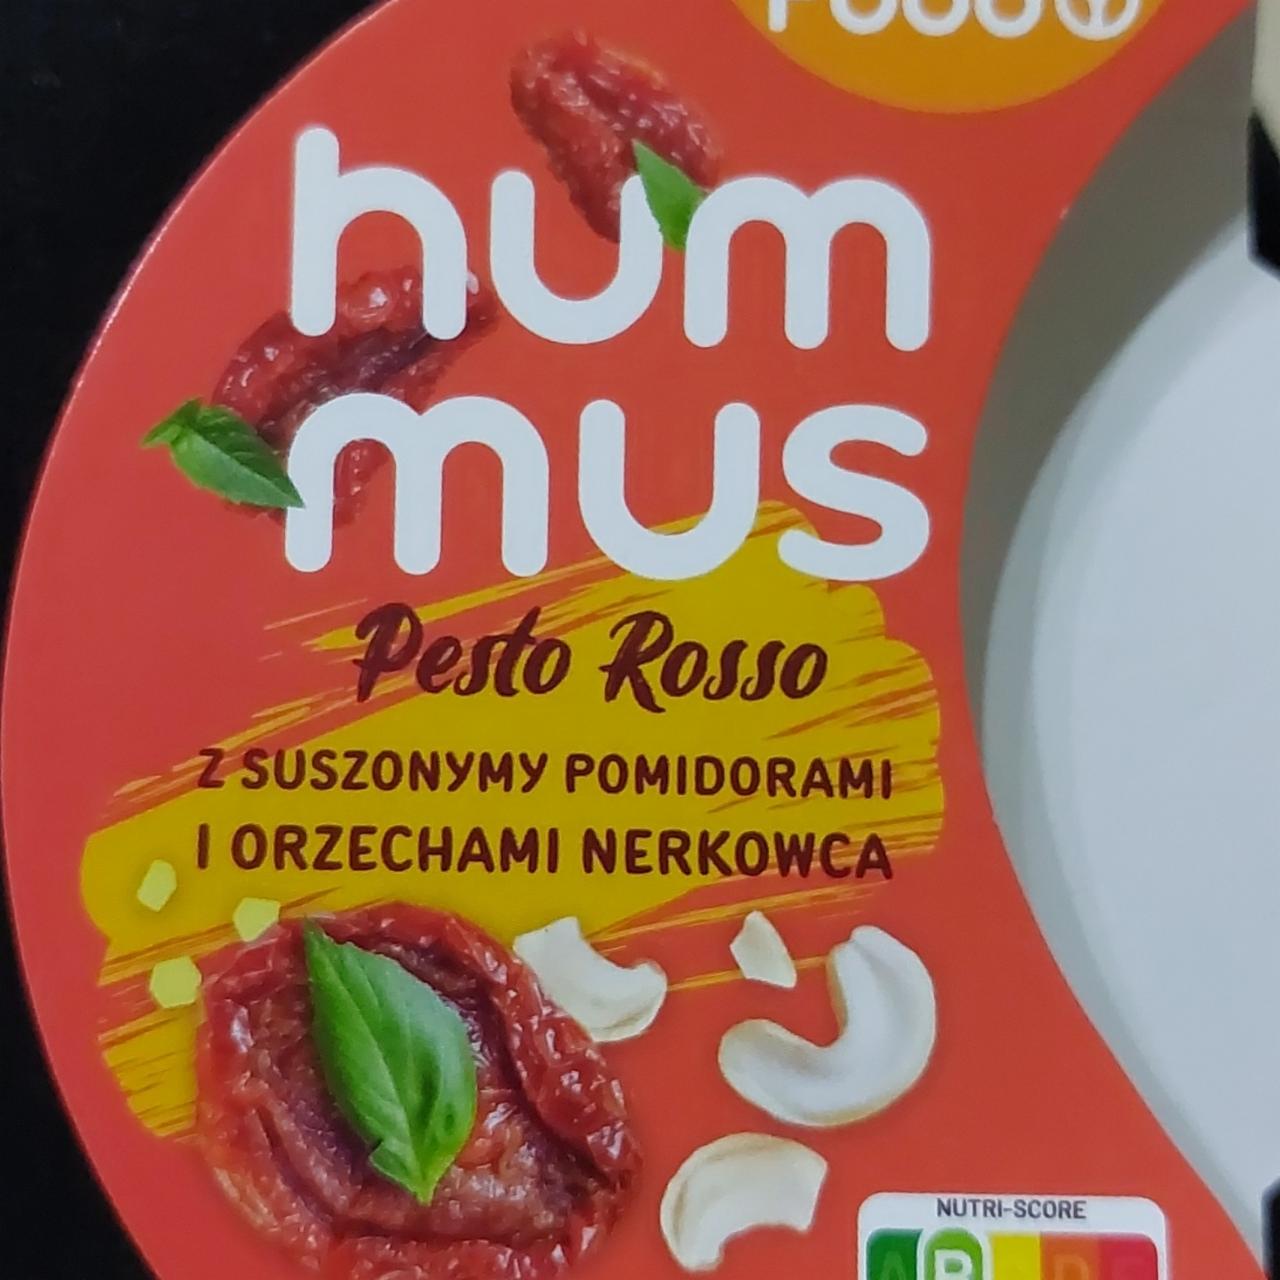 Zdjęcia - Humus pesto rosso Lavica Food